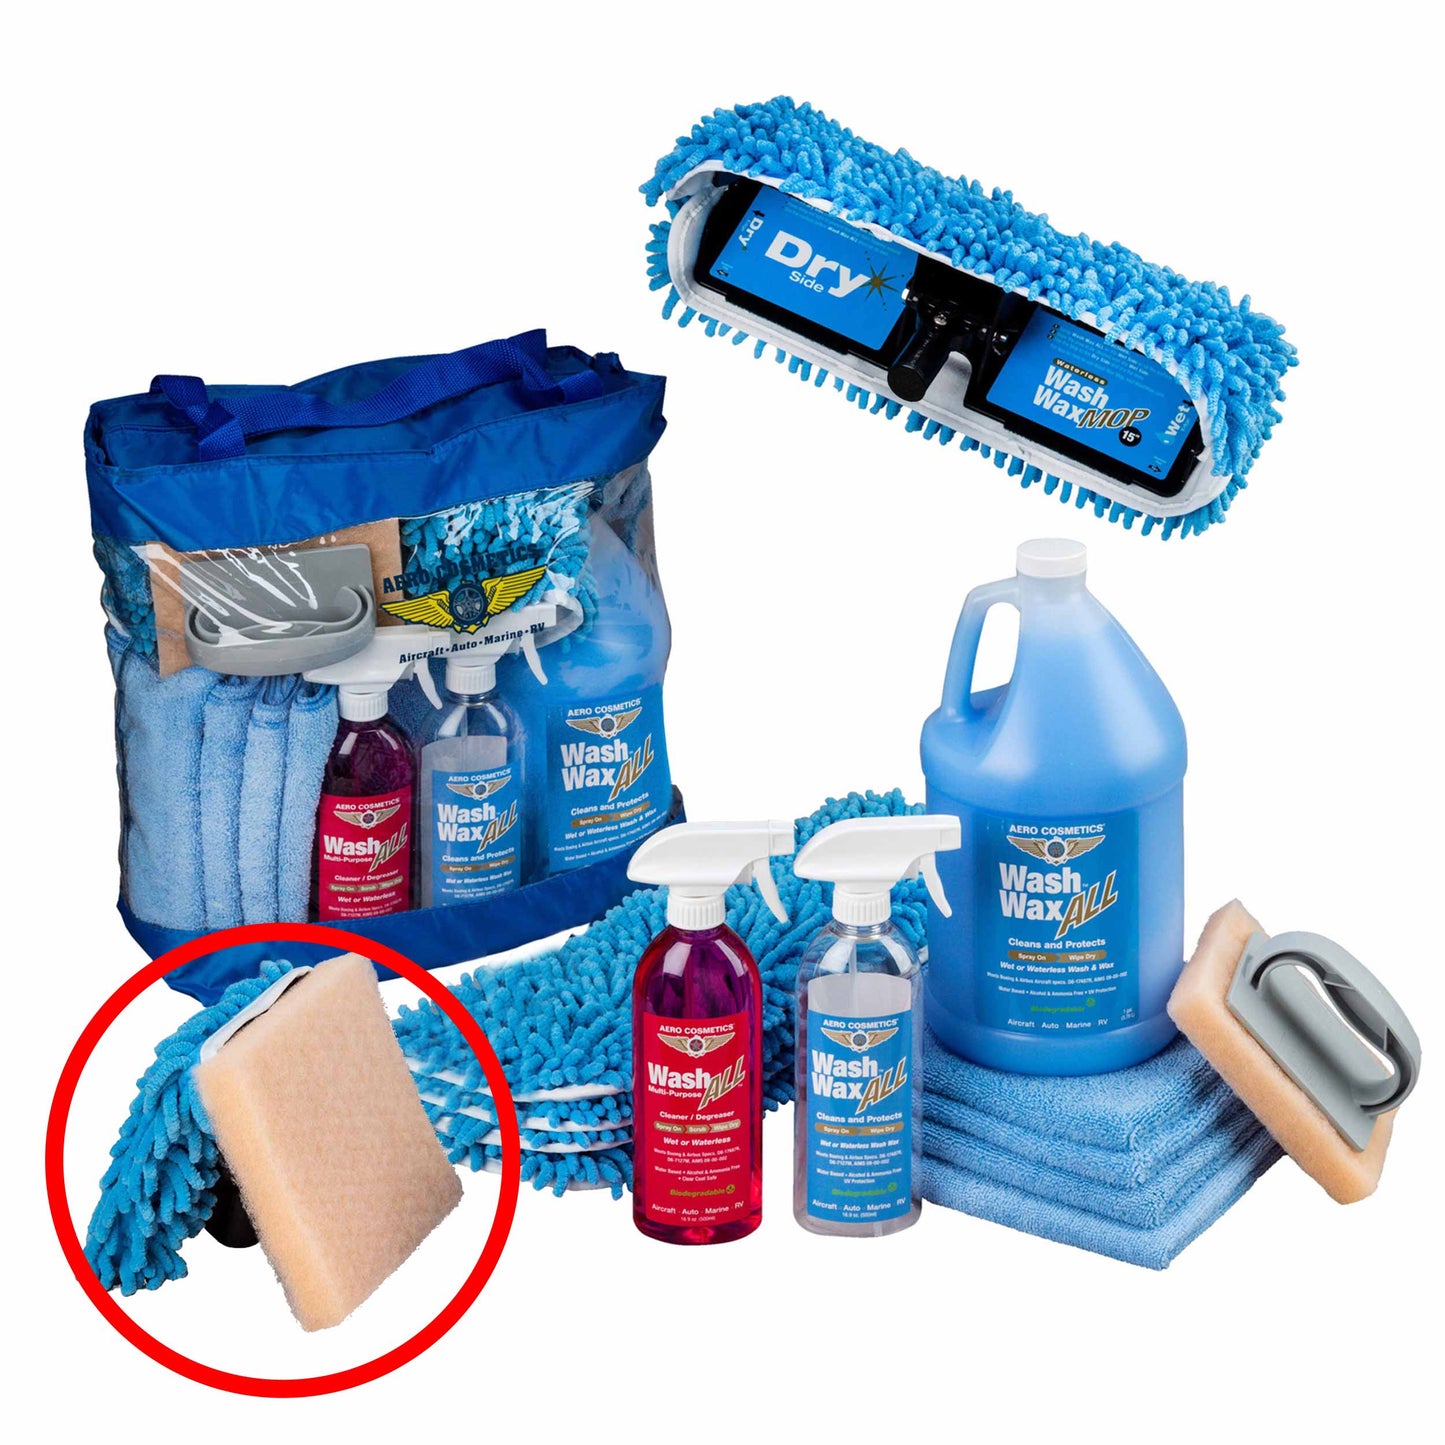 XL Pole Wash Wax Mop Kit